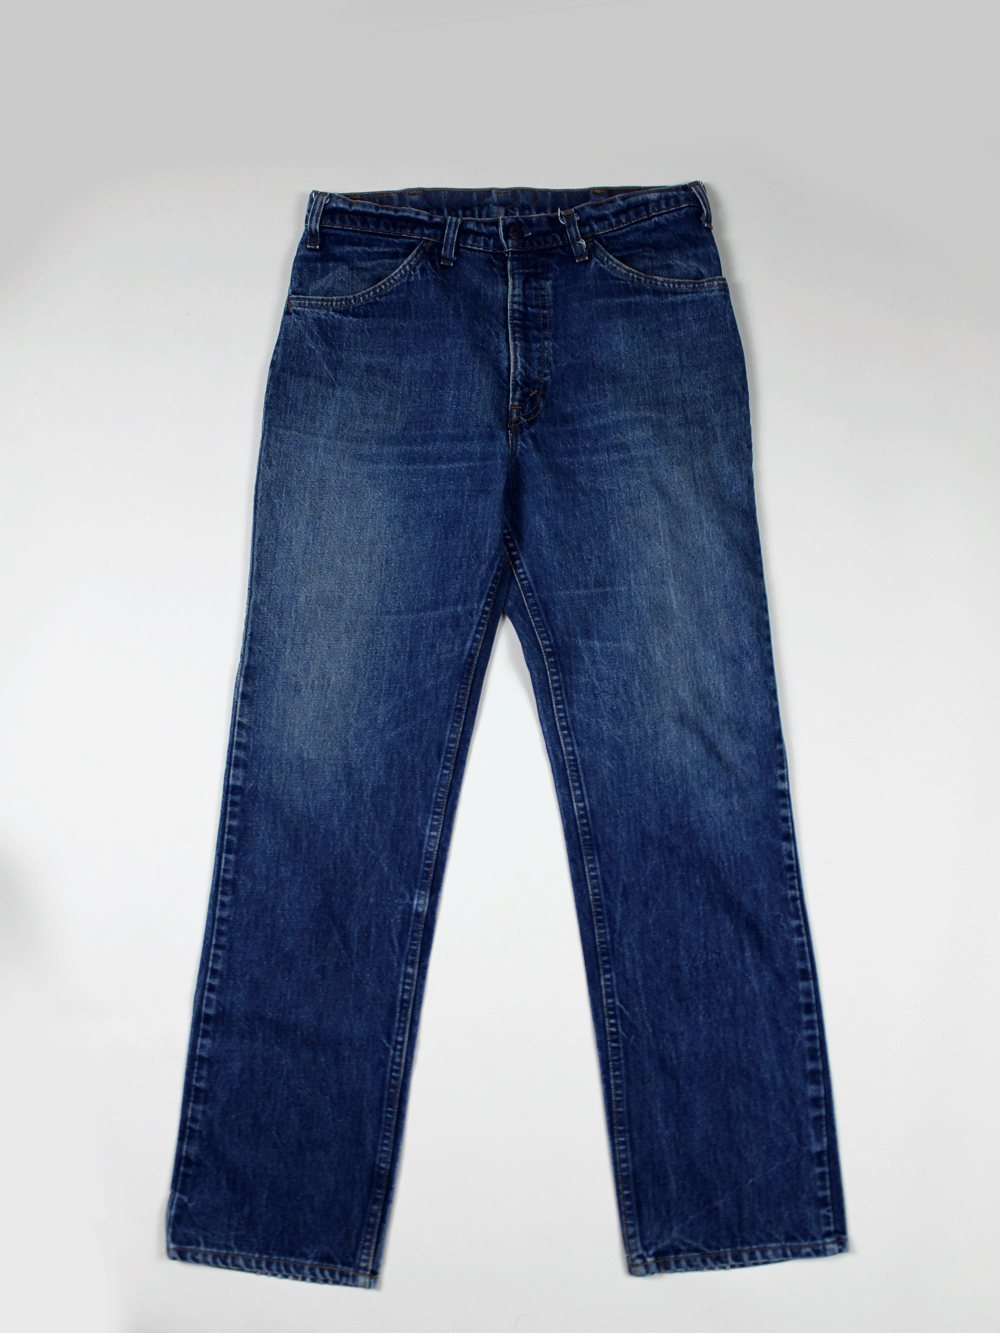 Levi's 519 Vintage Jeans (Orange Label)